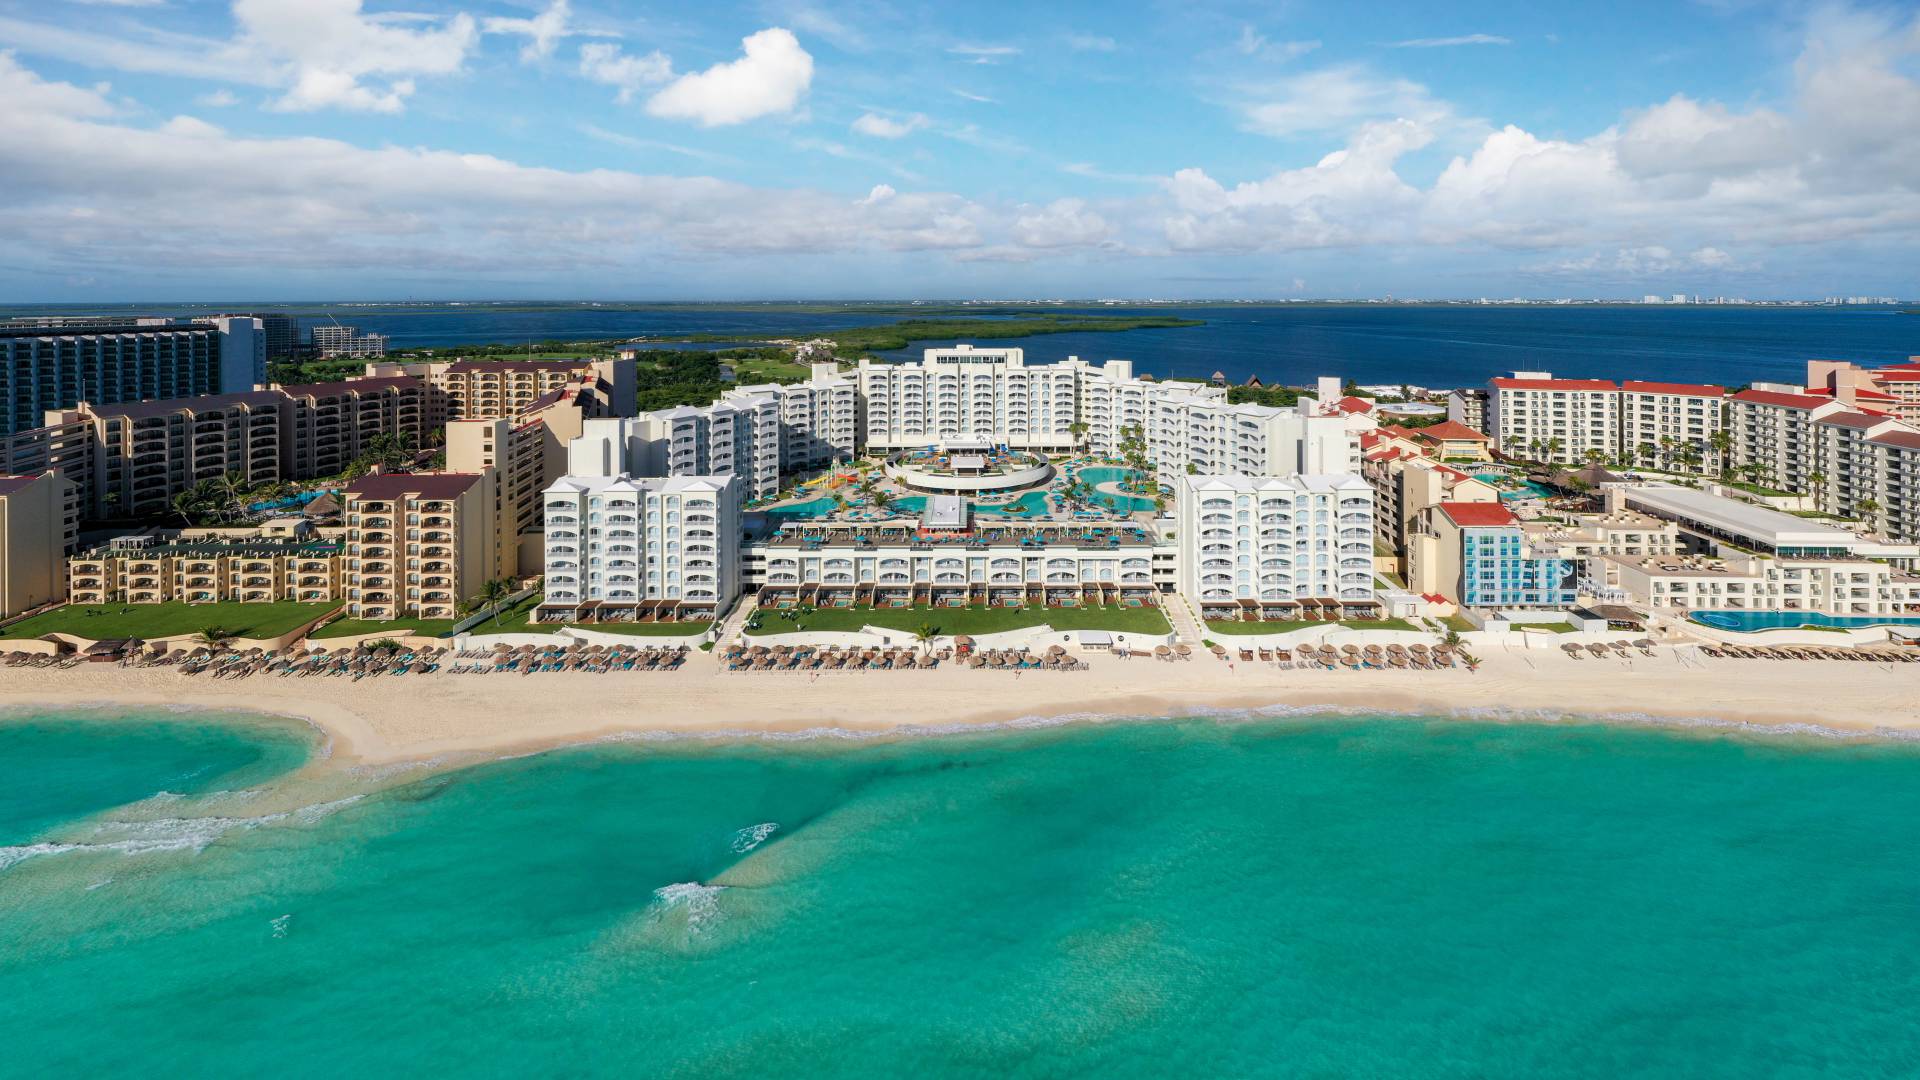 Location Hilton Cancun Mar Caribe All Inclusive Resort 